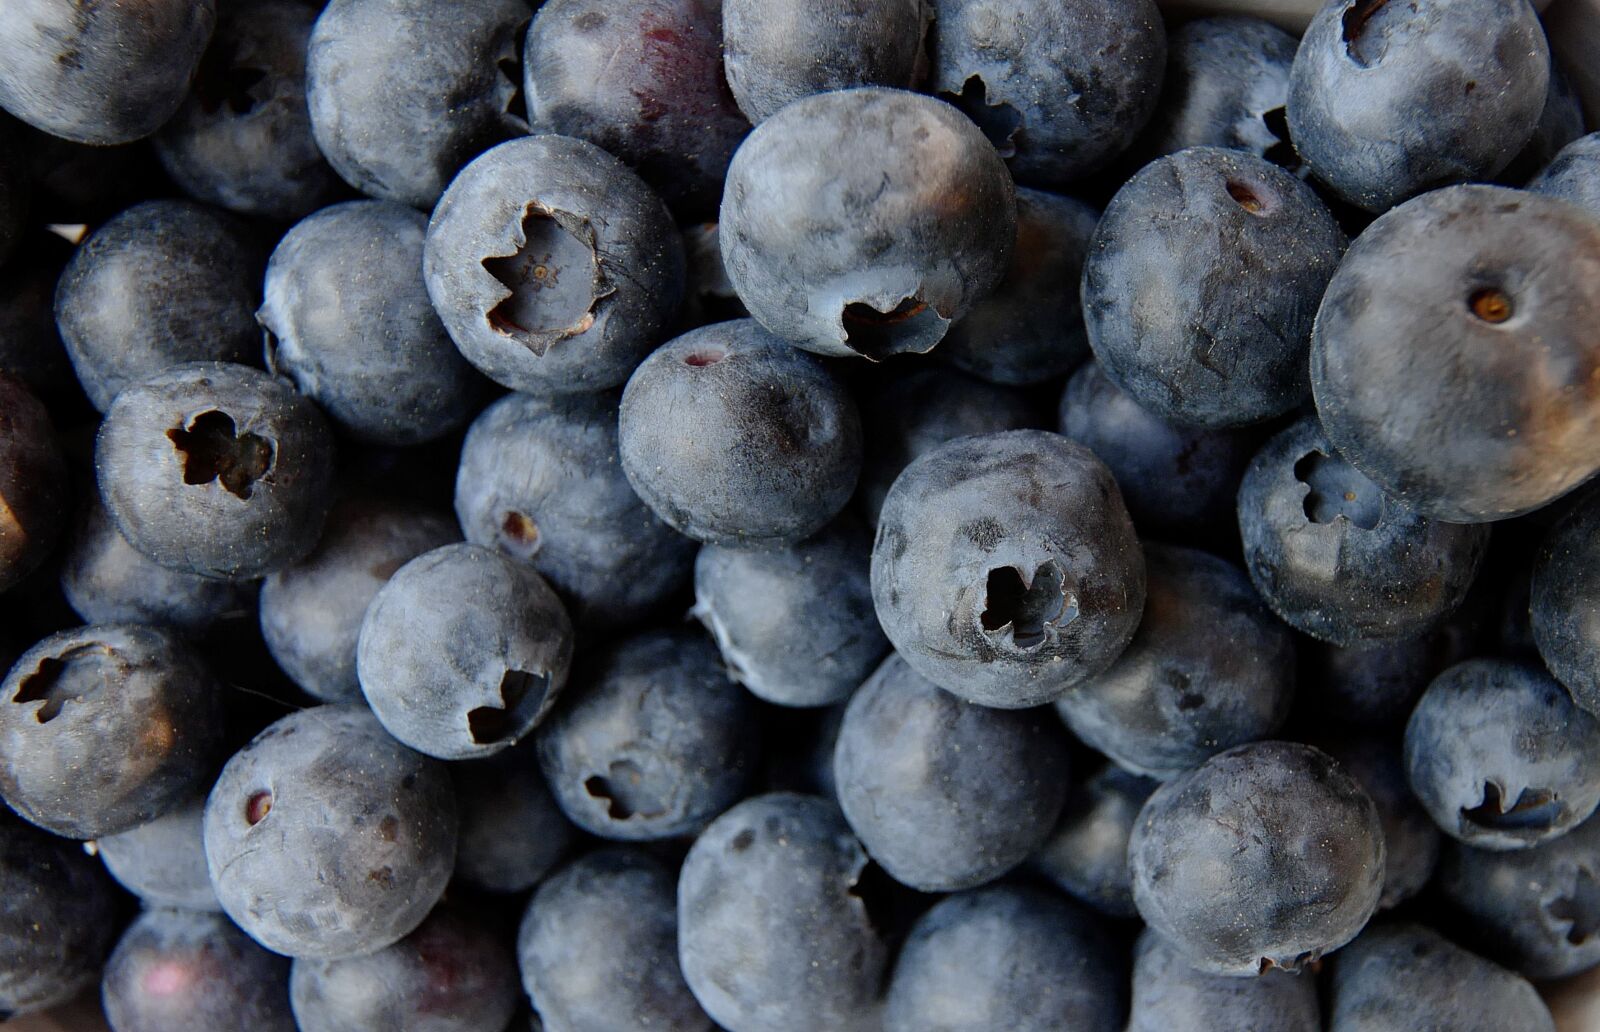 Super-Vario-Elmar-TL  1:3.5-4.5 / 11-23 ASPH. sample photo. Blueberry, blueberries, food photography